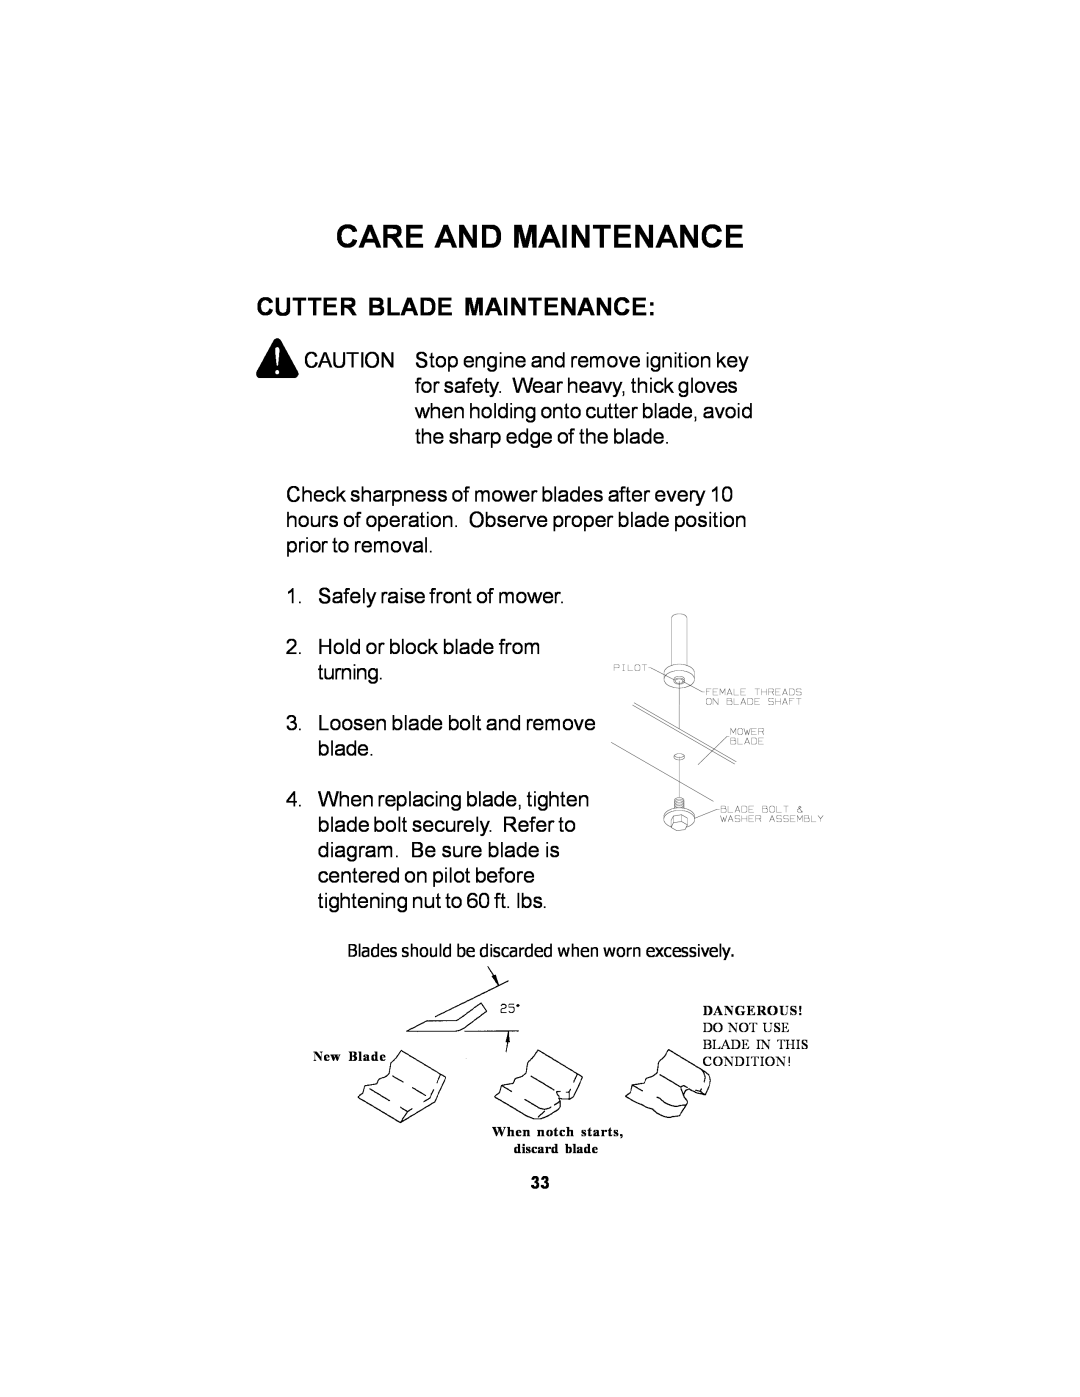 Dixon 14295-1005 manual Cutter Blade Maintenance, Care And Maintenance 